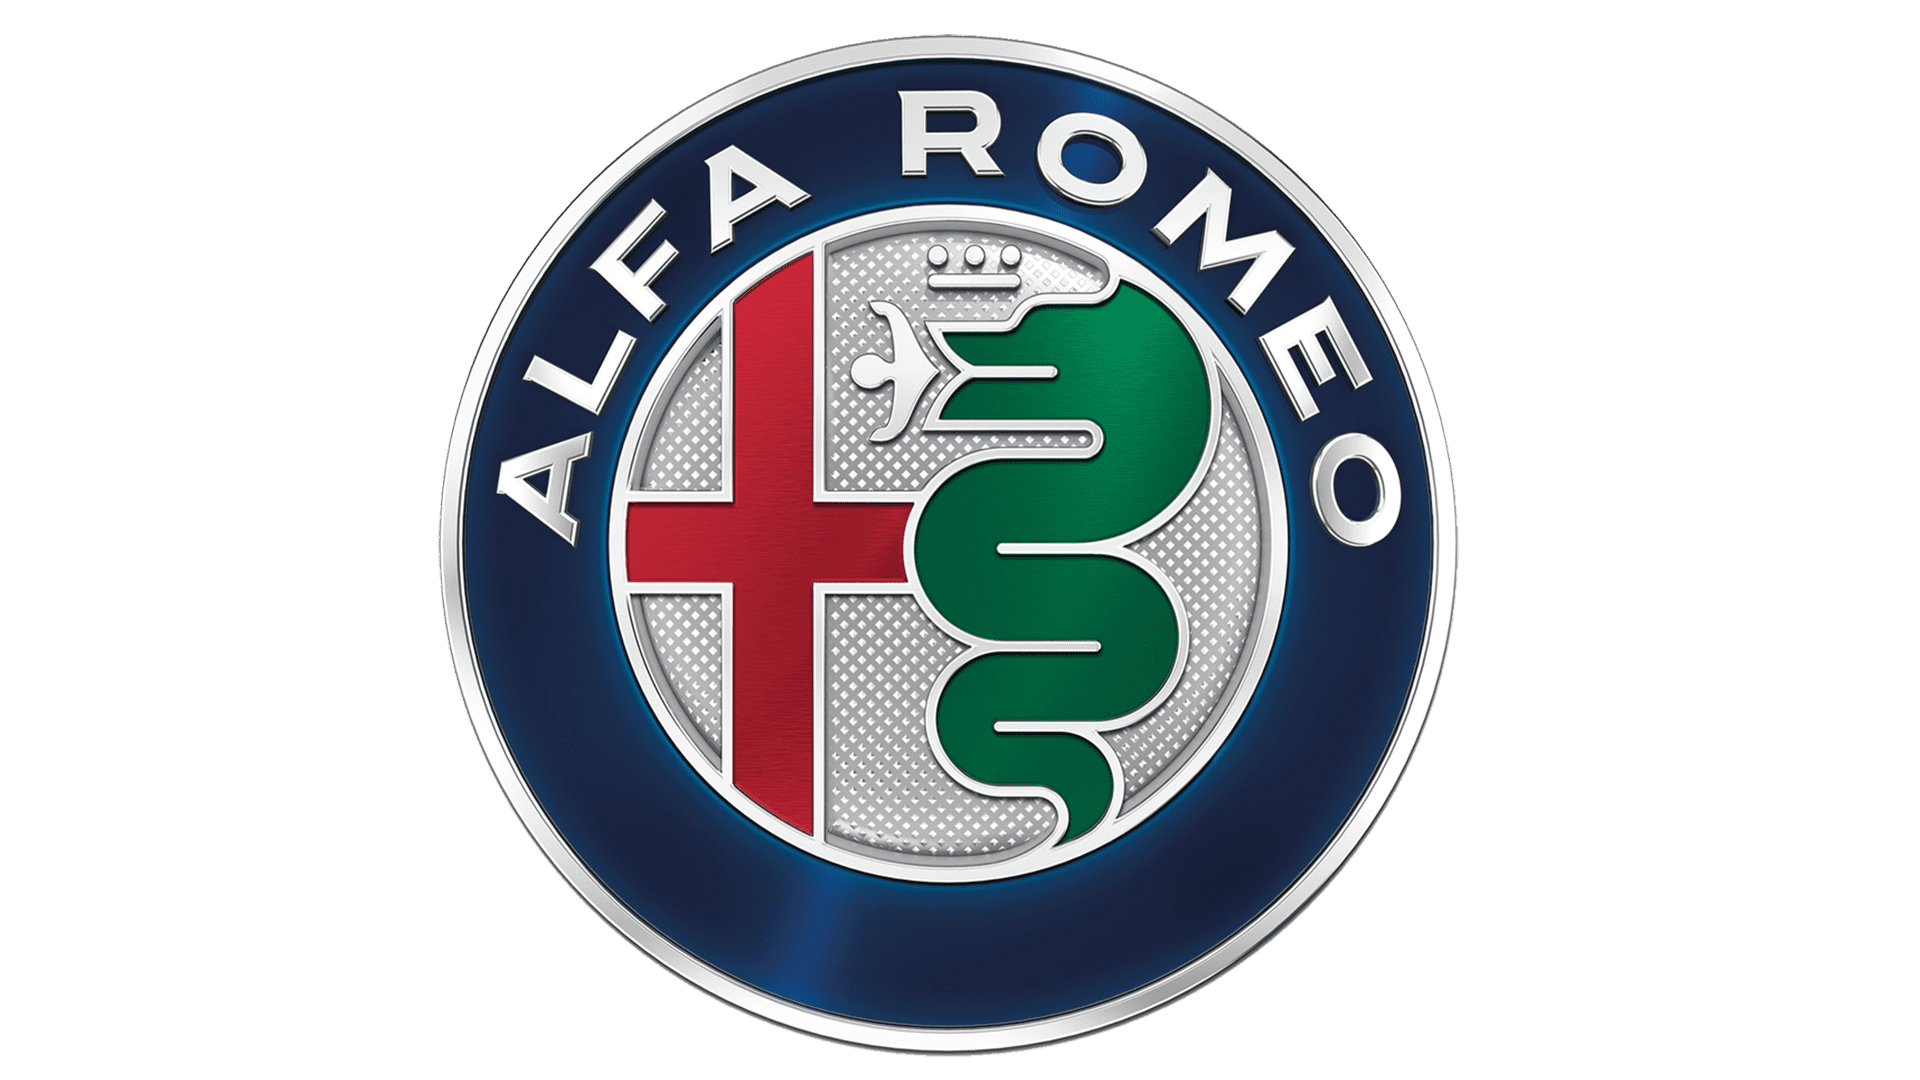 Italian Football TV on X: PART 2 - Old logos vs New logos, TAKE